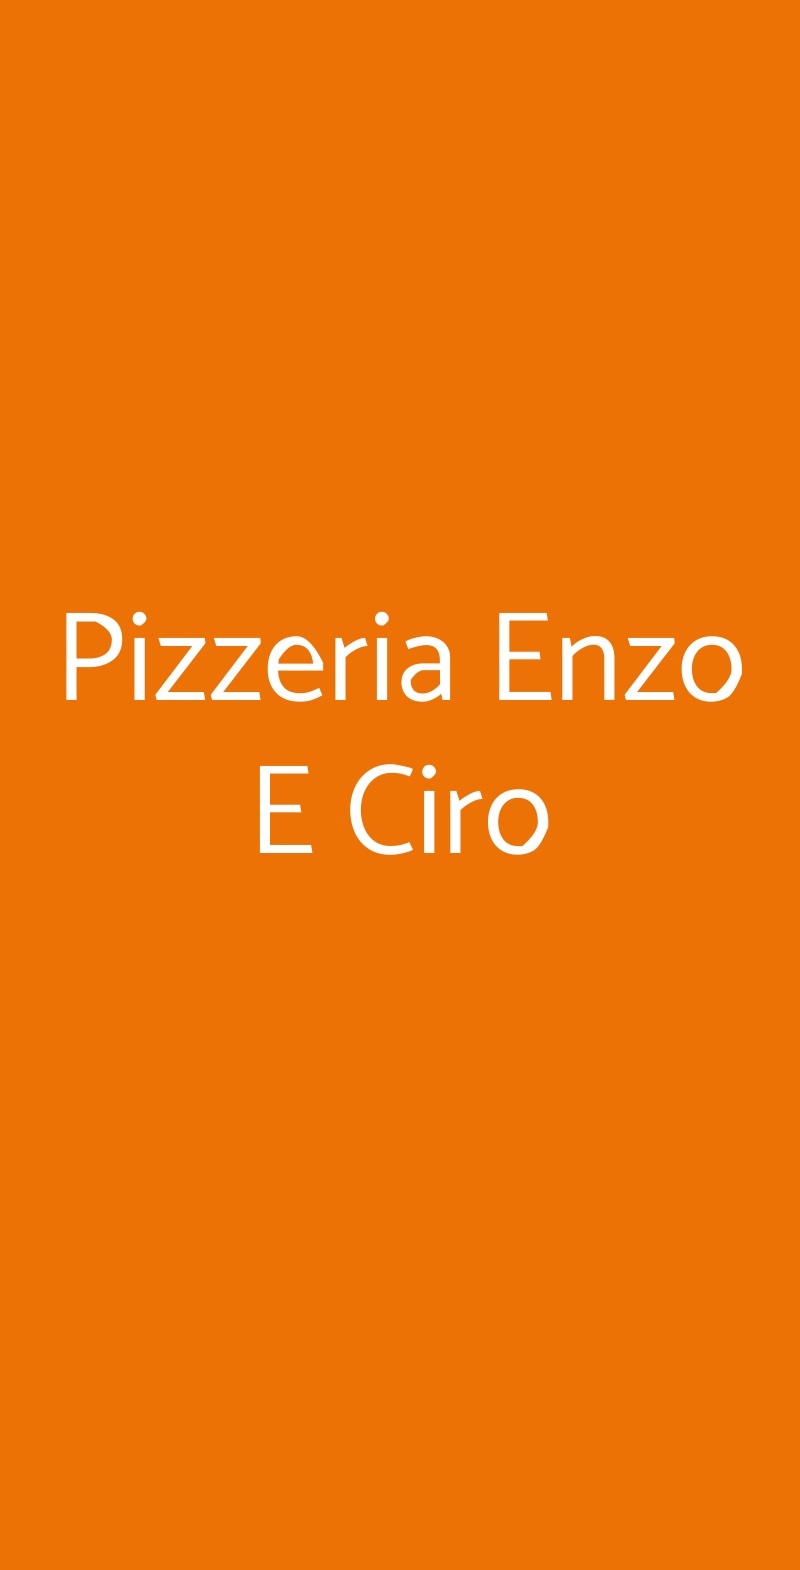 Pizzeria Enzo E Ciro Bari menù 1 pagina